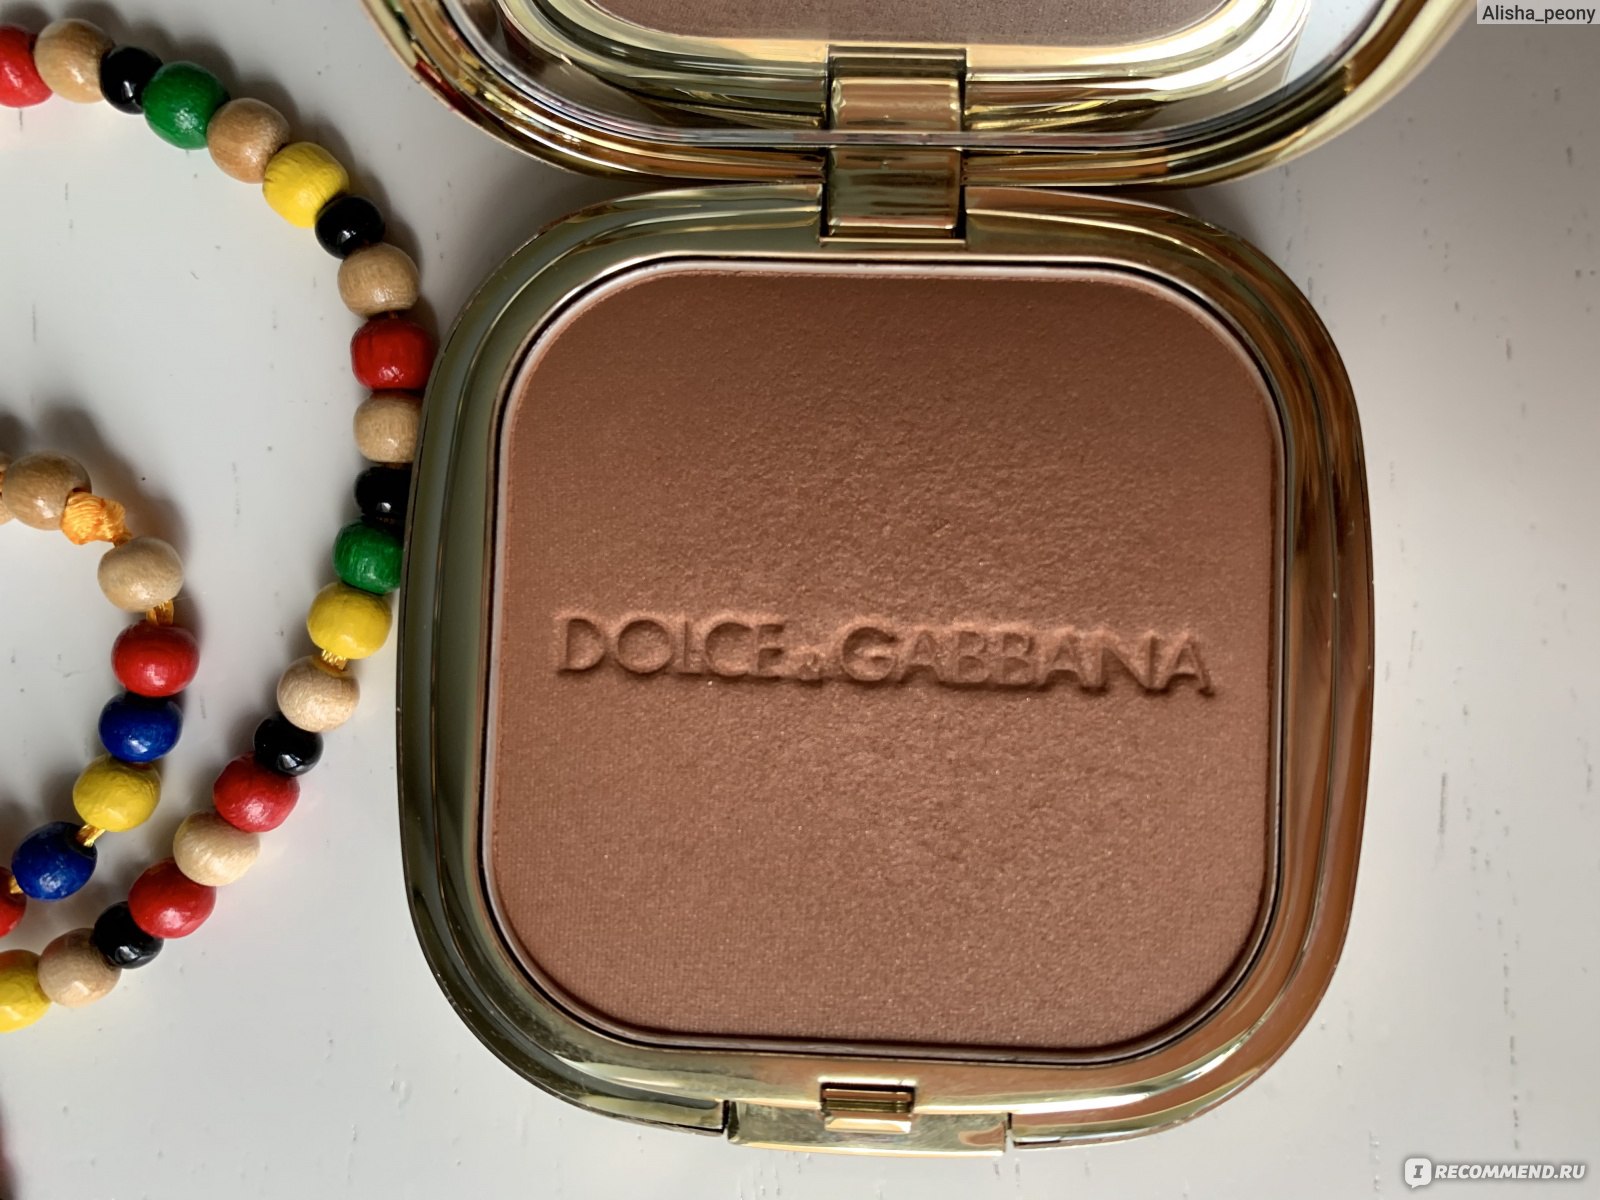 Хайлайтер dolce gabbana. Dolce Gabbana бронзер. Бронзирующая пудра Solar Glow, Dolce Gabbana. Дольче Габбана Солар Глоу бронзер. Dolce Gabbana Solar Glow пудра.